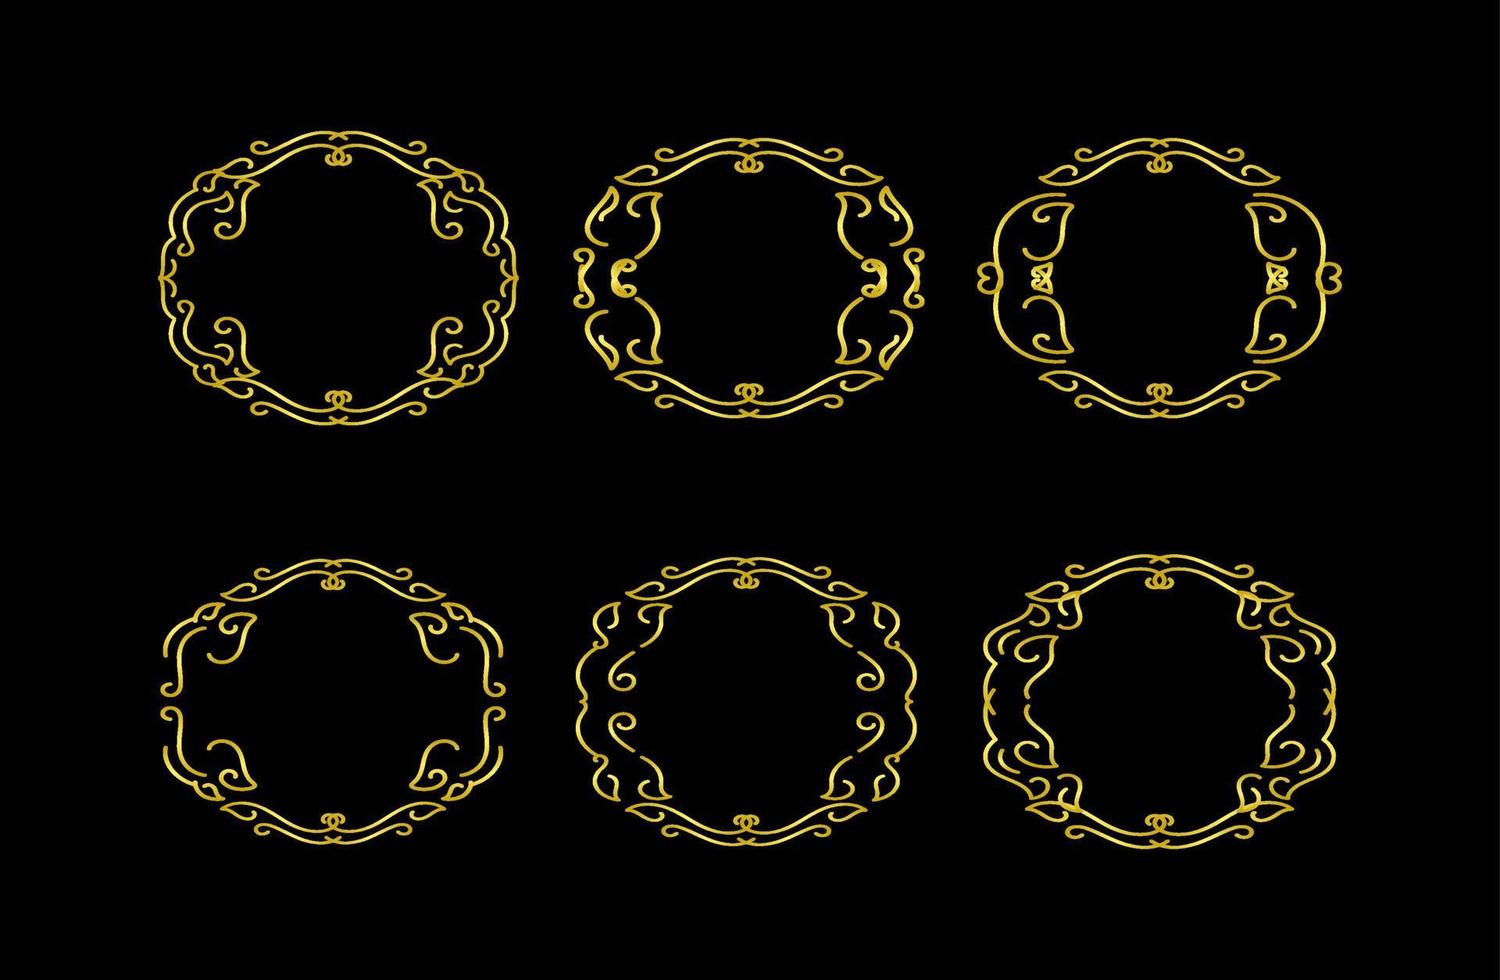 gouden randen elementen set collectie, ornament vector, frame vector